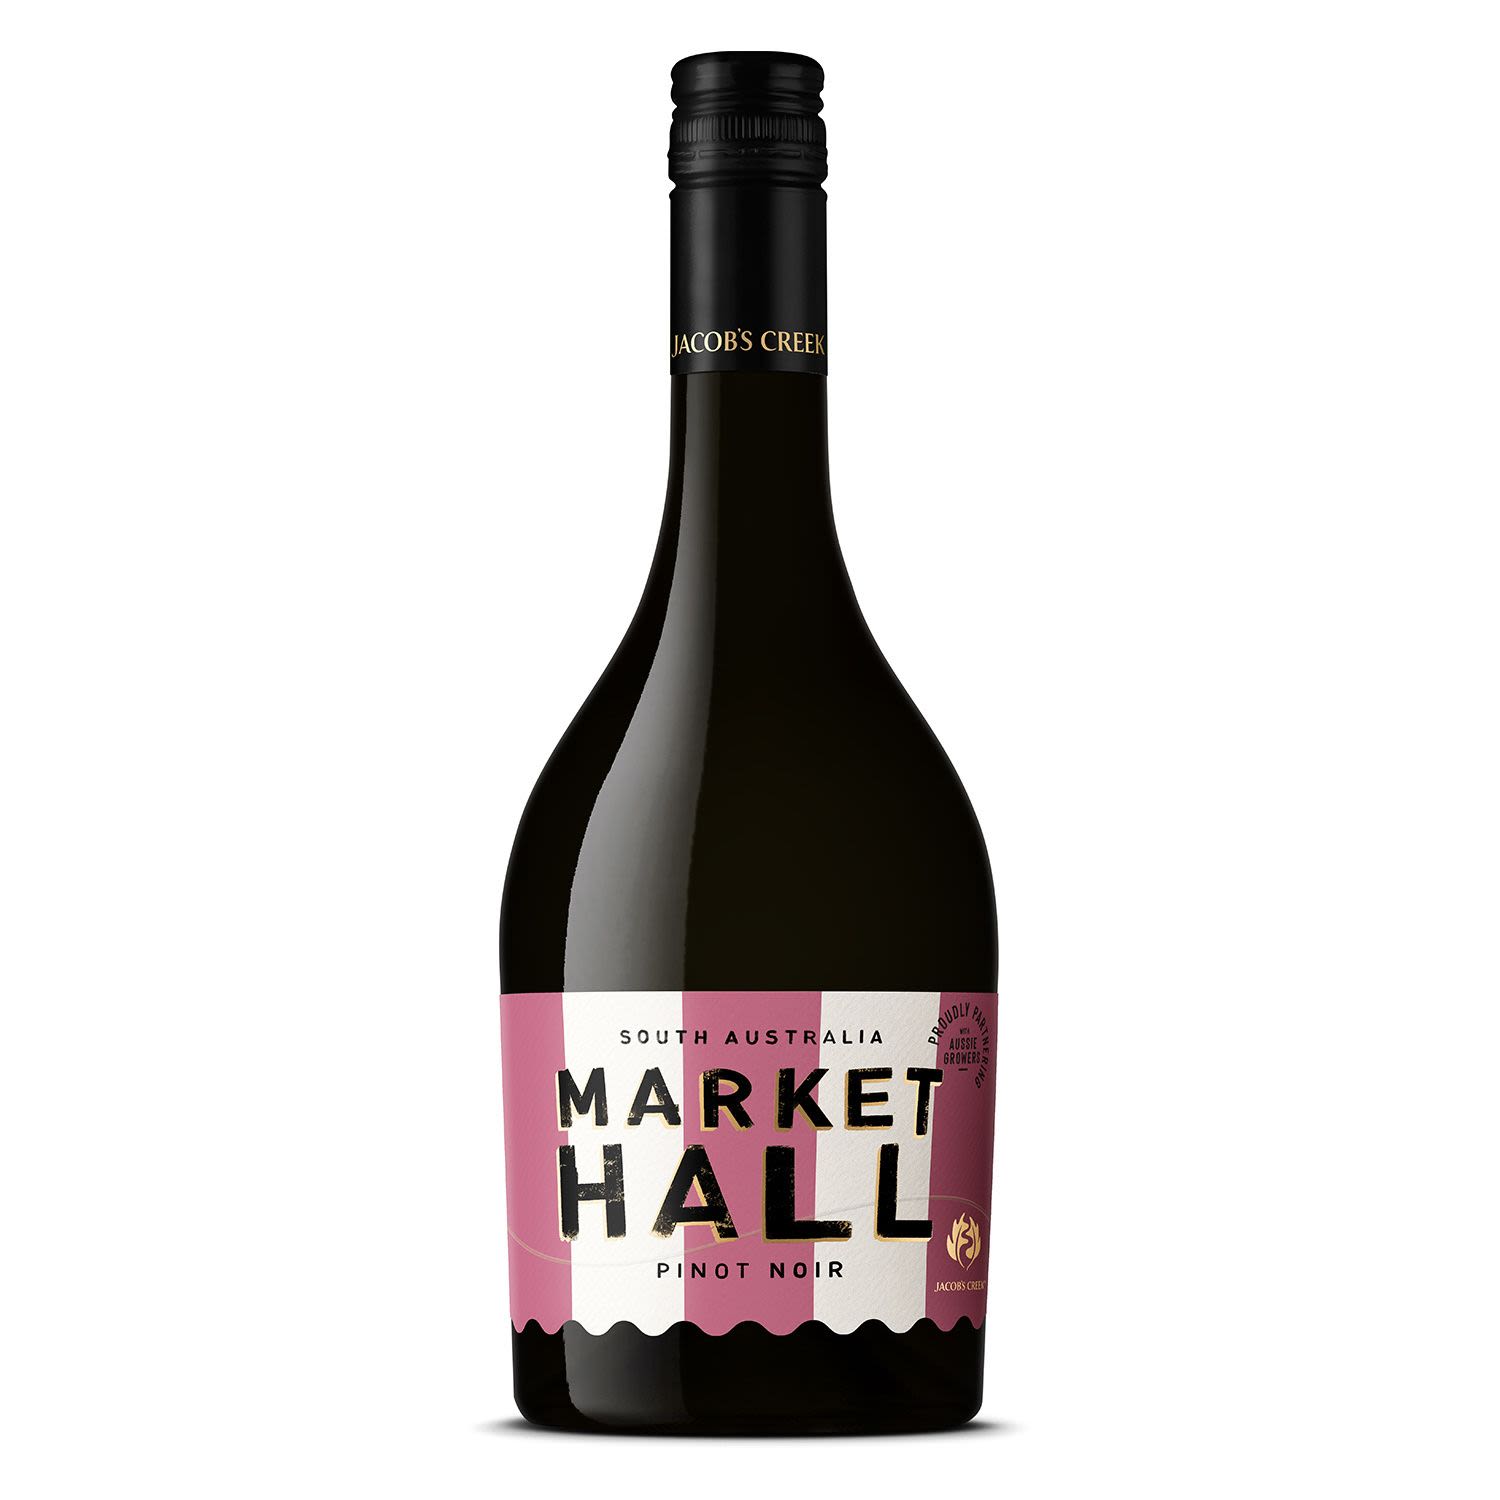 Jacob's Creek Market Hall Pinot Noir 750mL Bottle